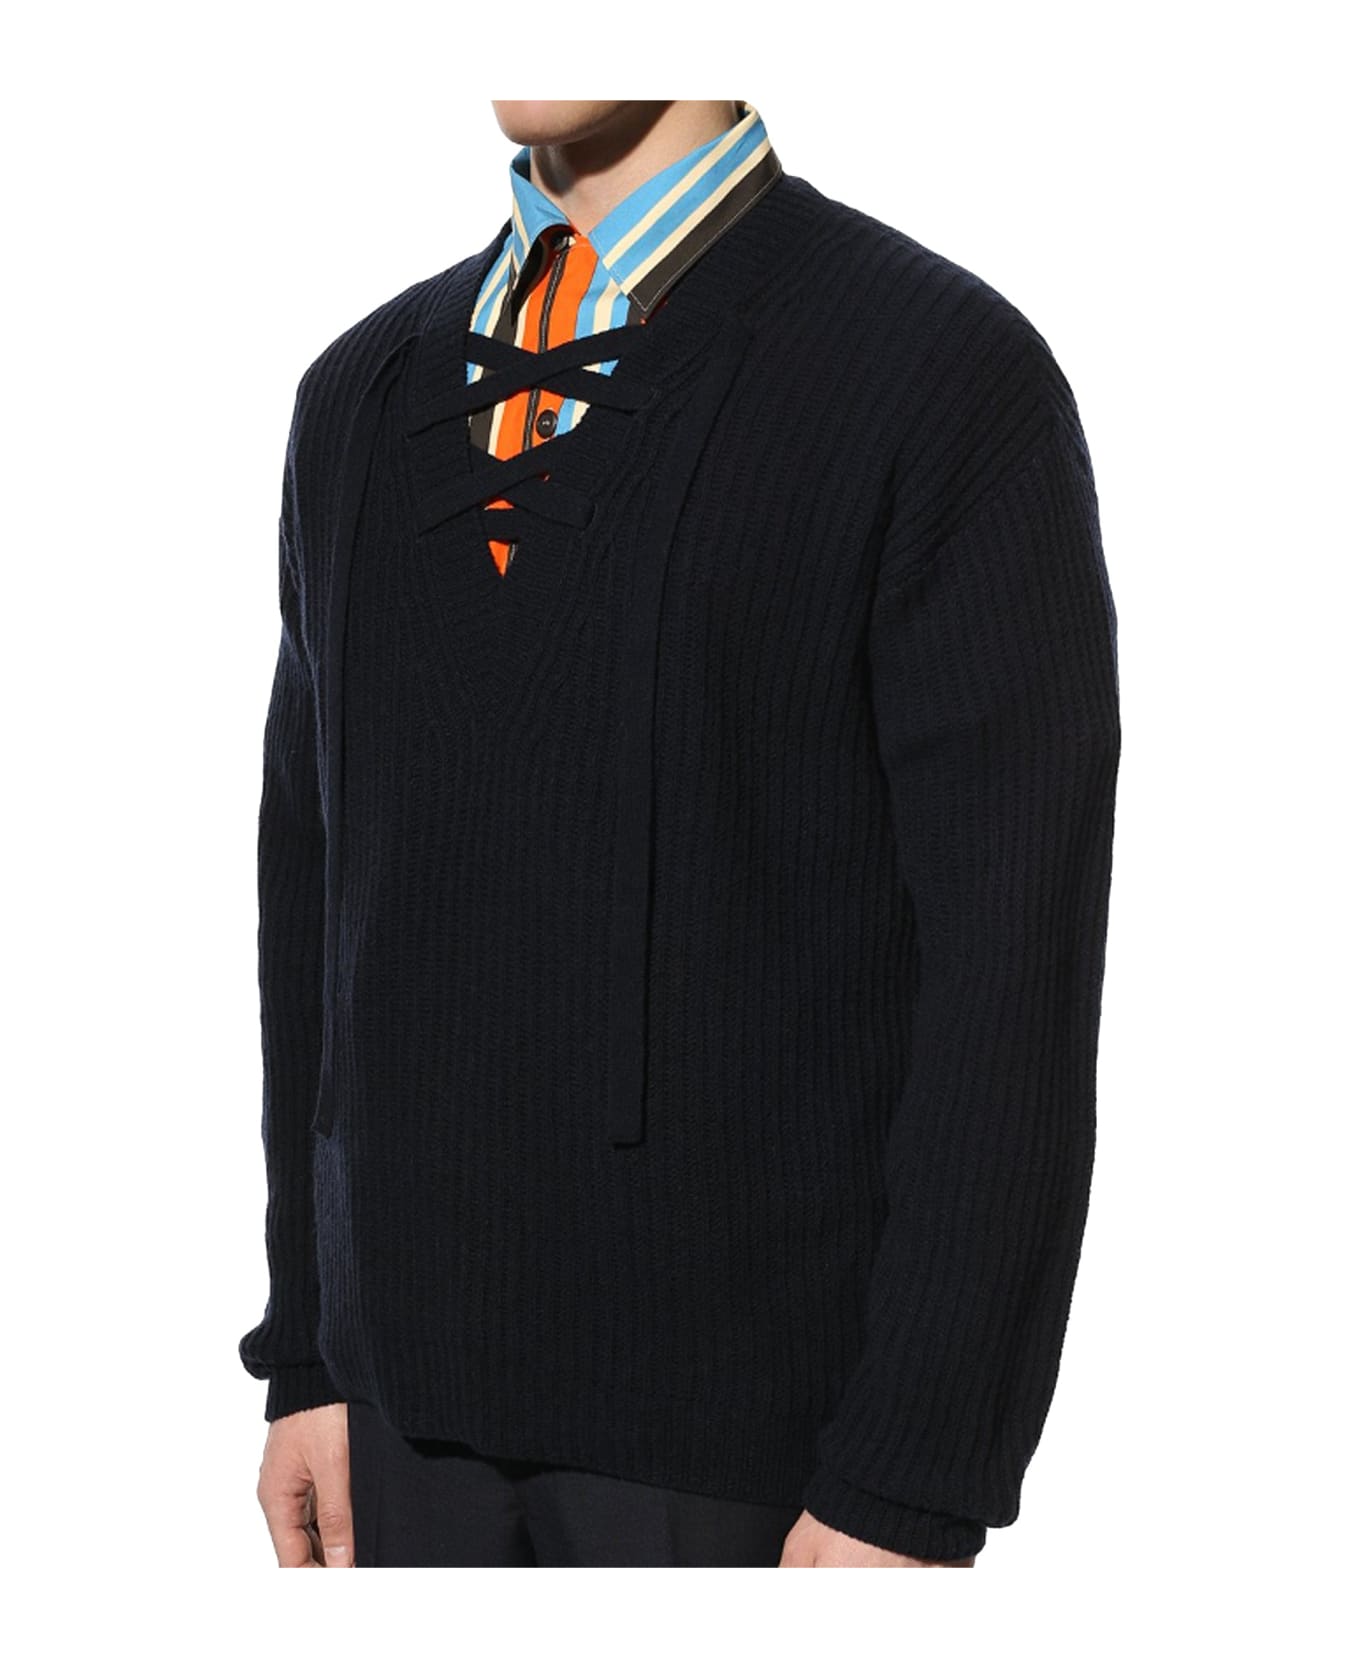 Prada Cashmere Sweater - Blue